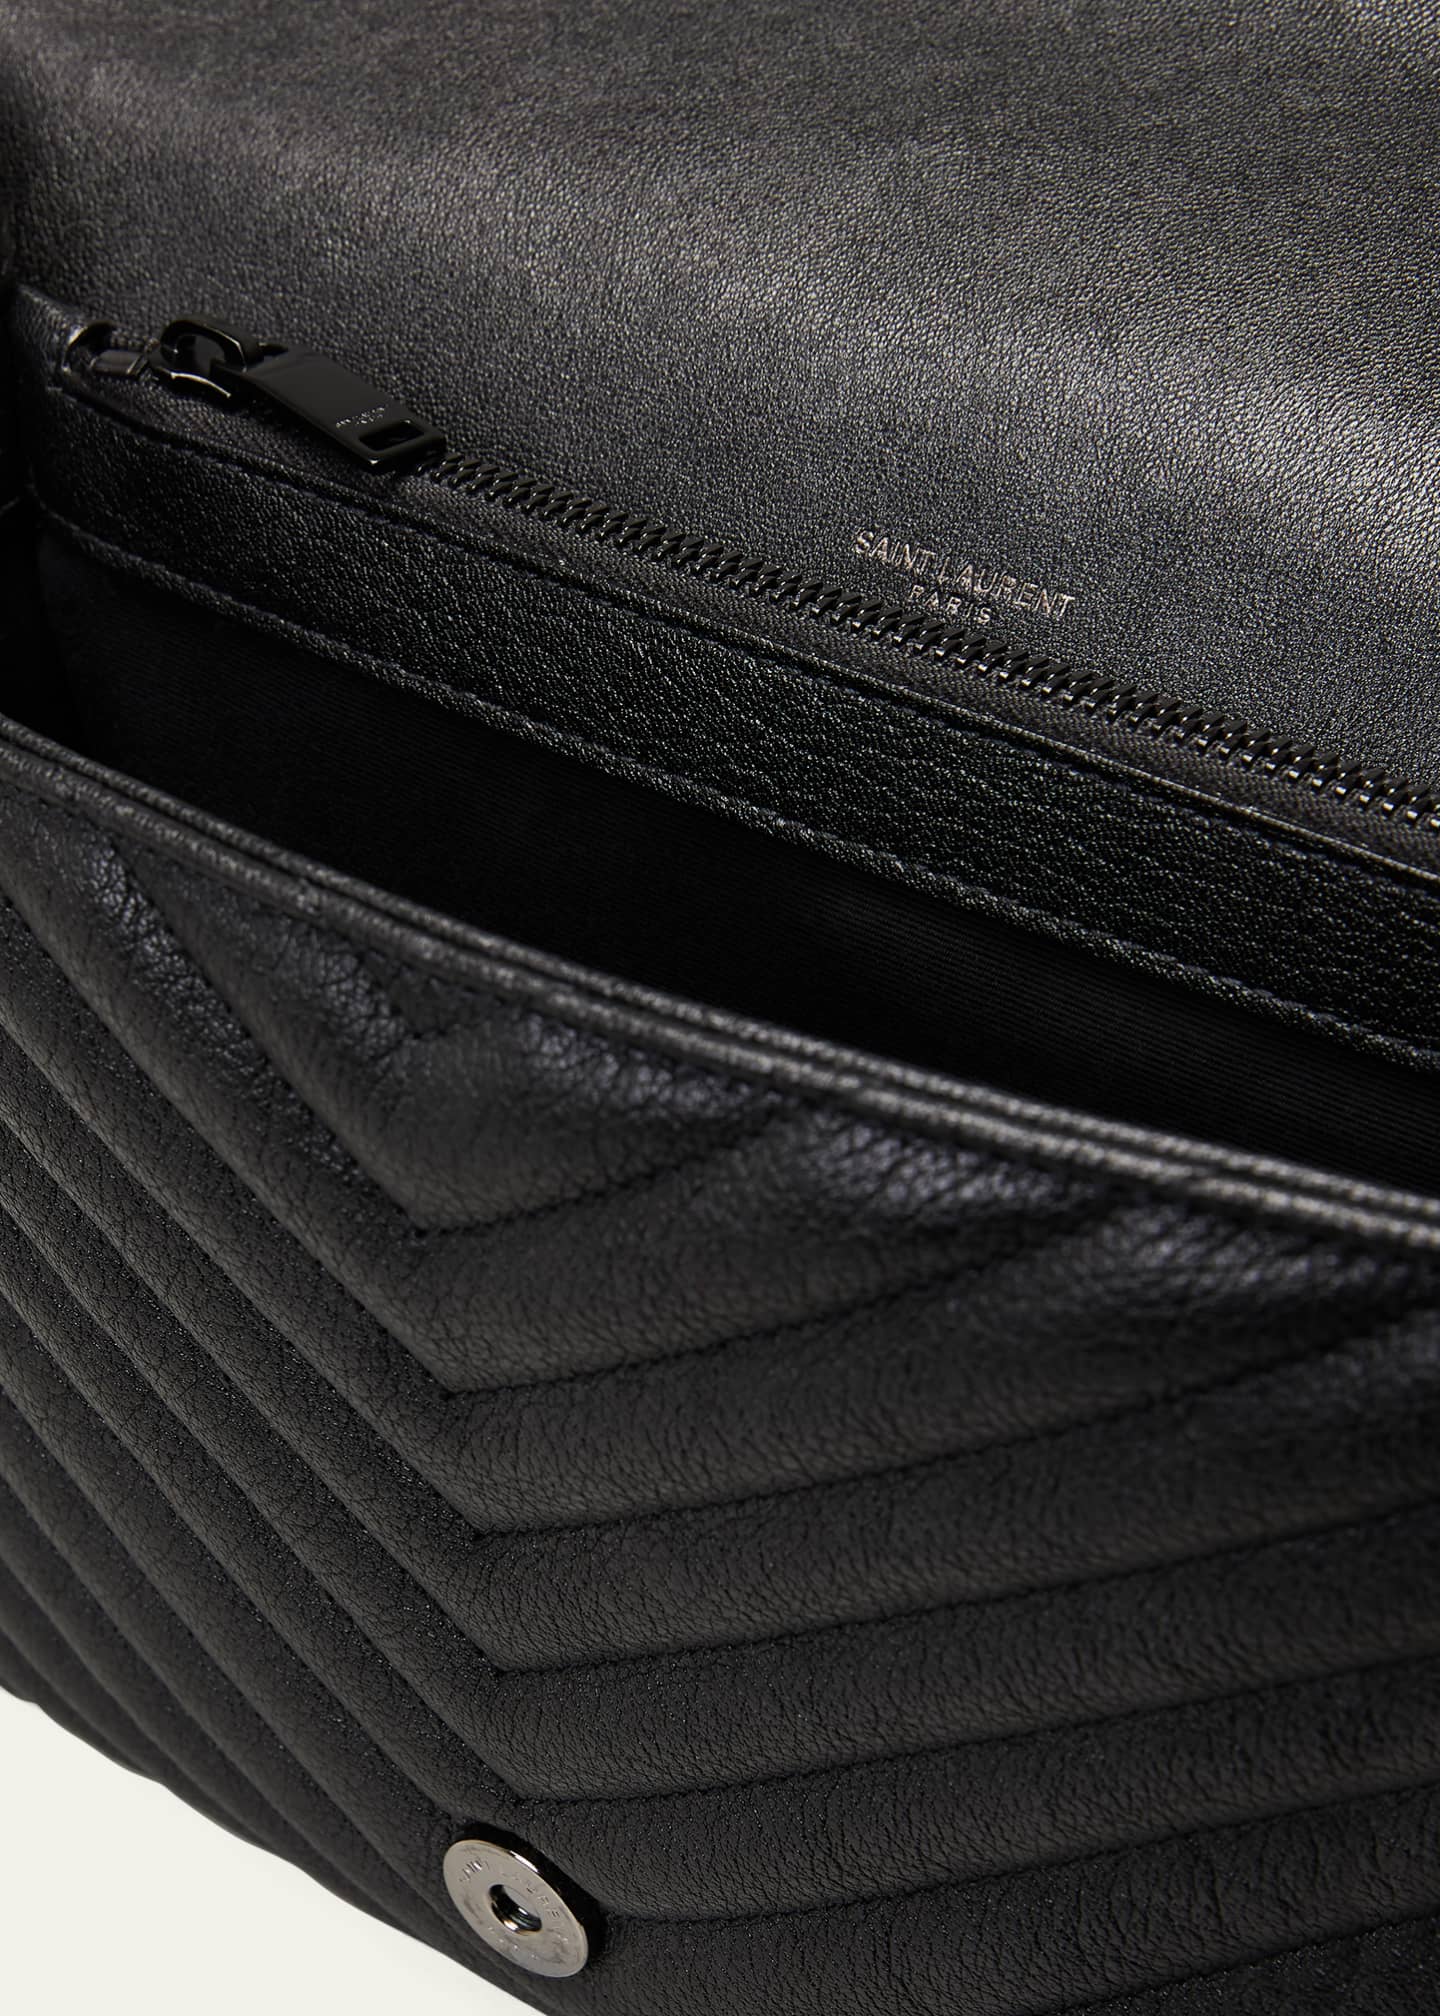 Black College medium YSL quilted leather cross-body bag, Saint Laurent